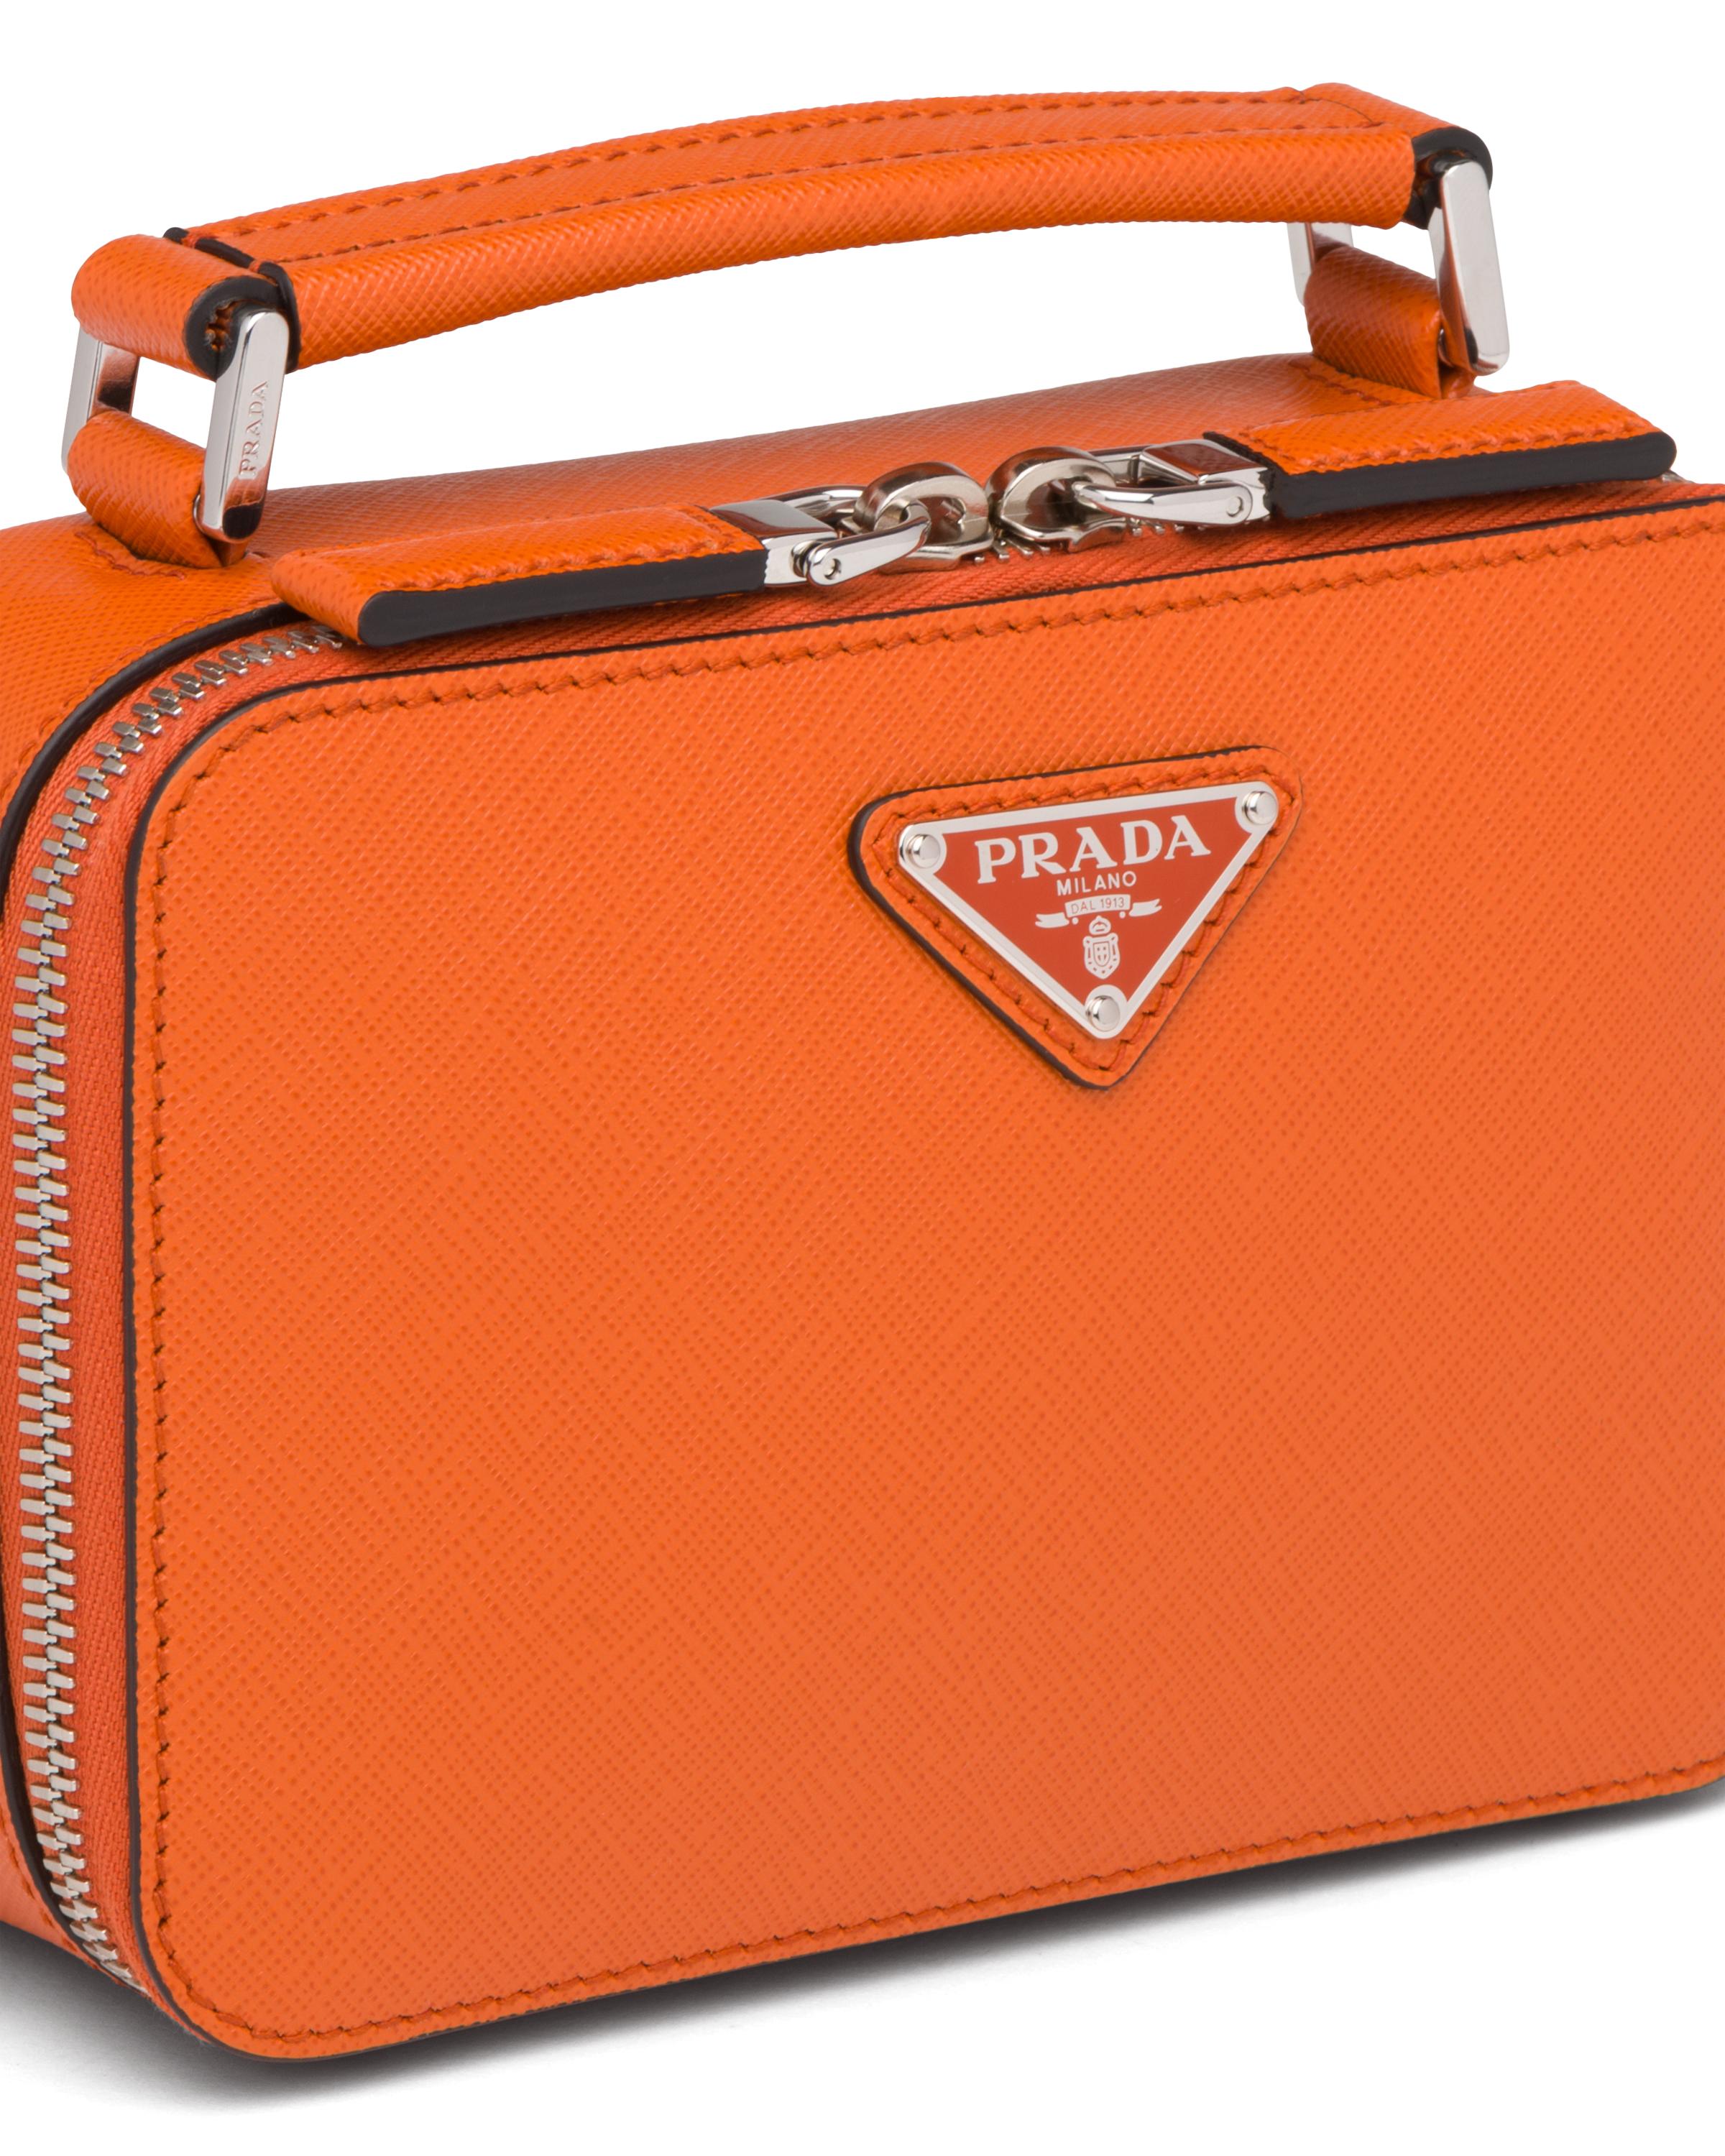 Prada Brique Saffiano Leather Cross-body Bag in Papaya (Orange 